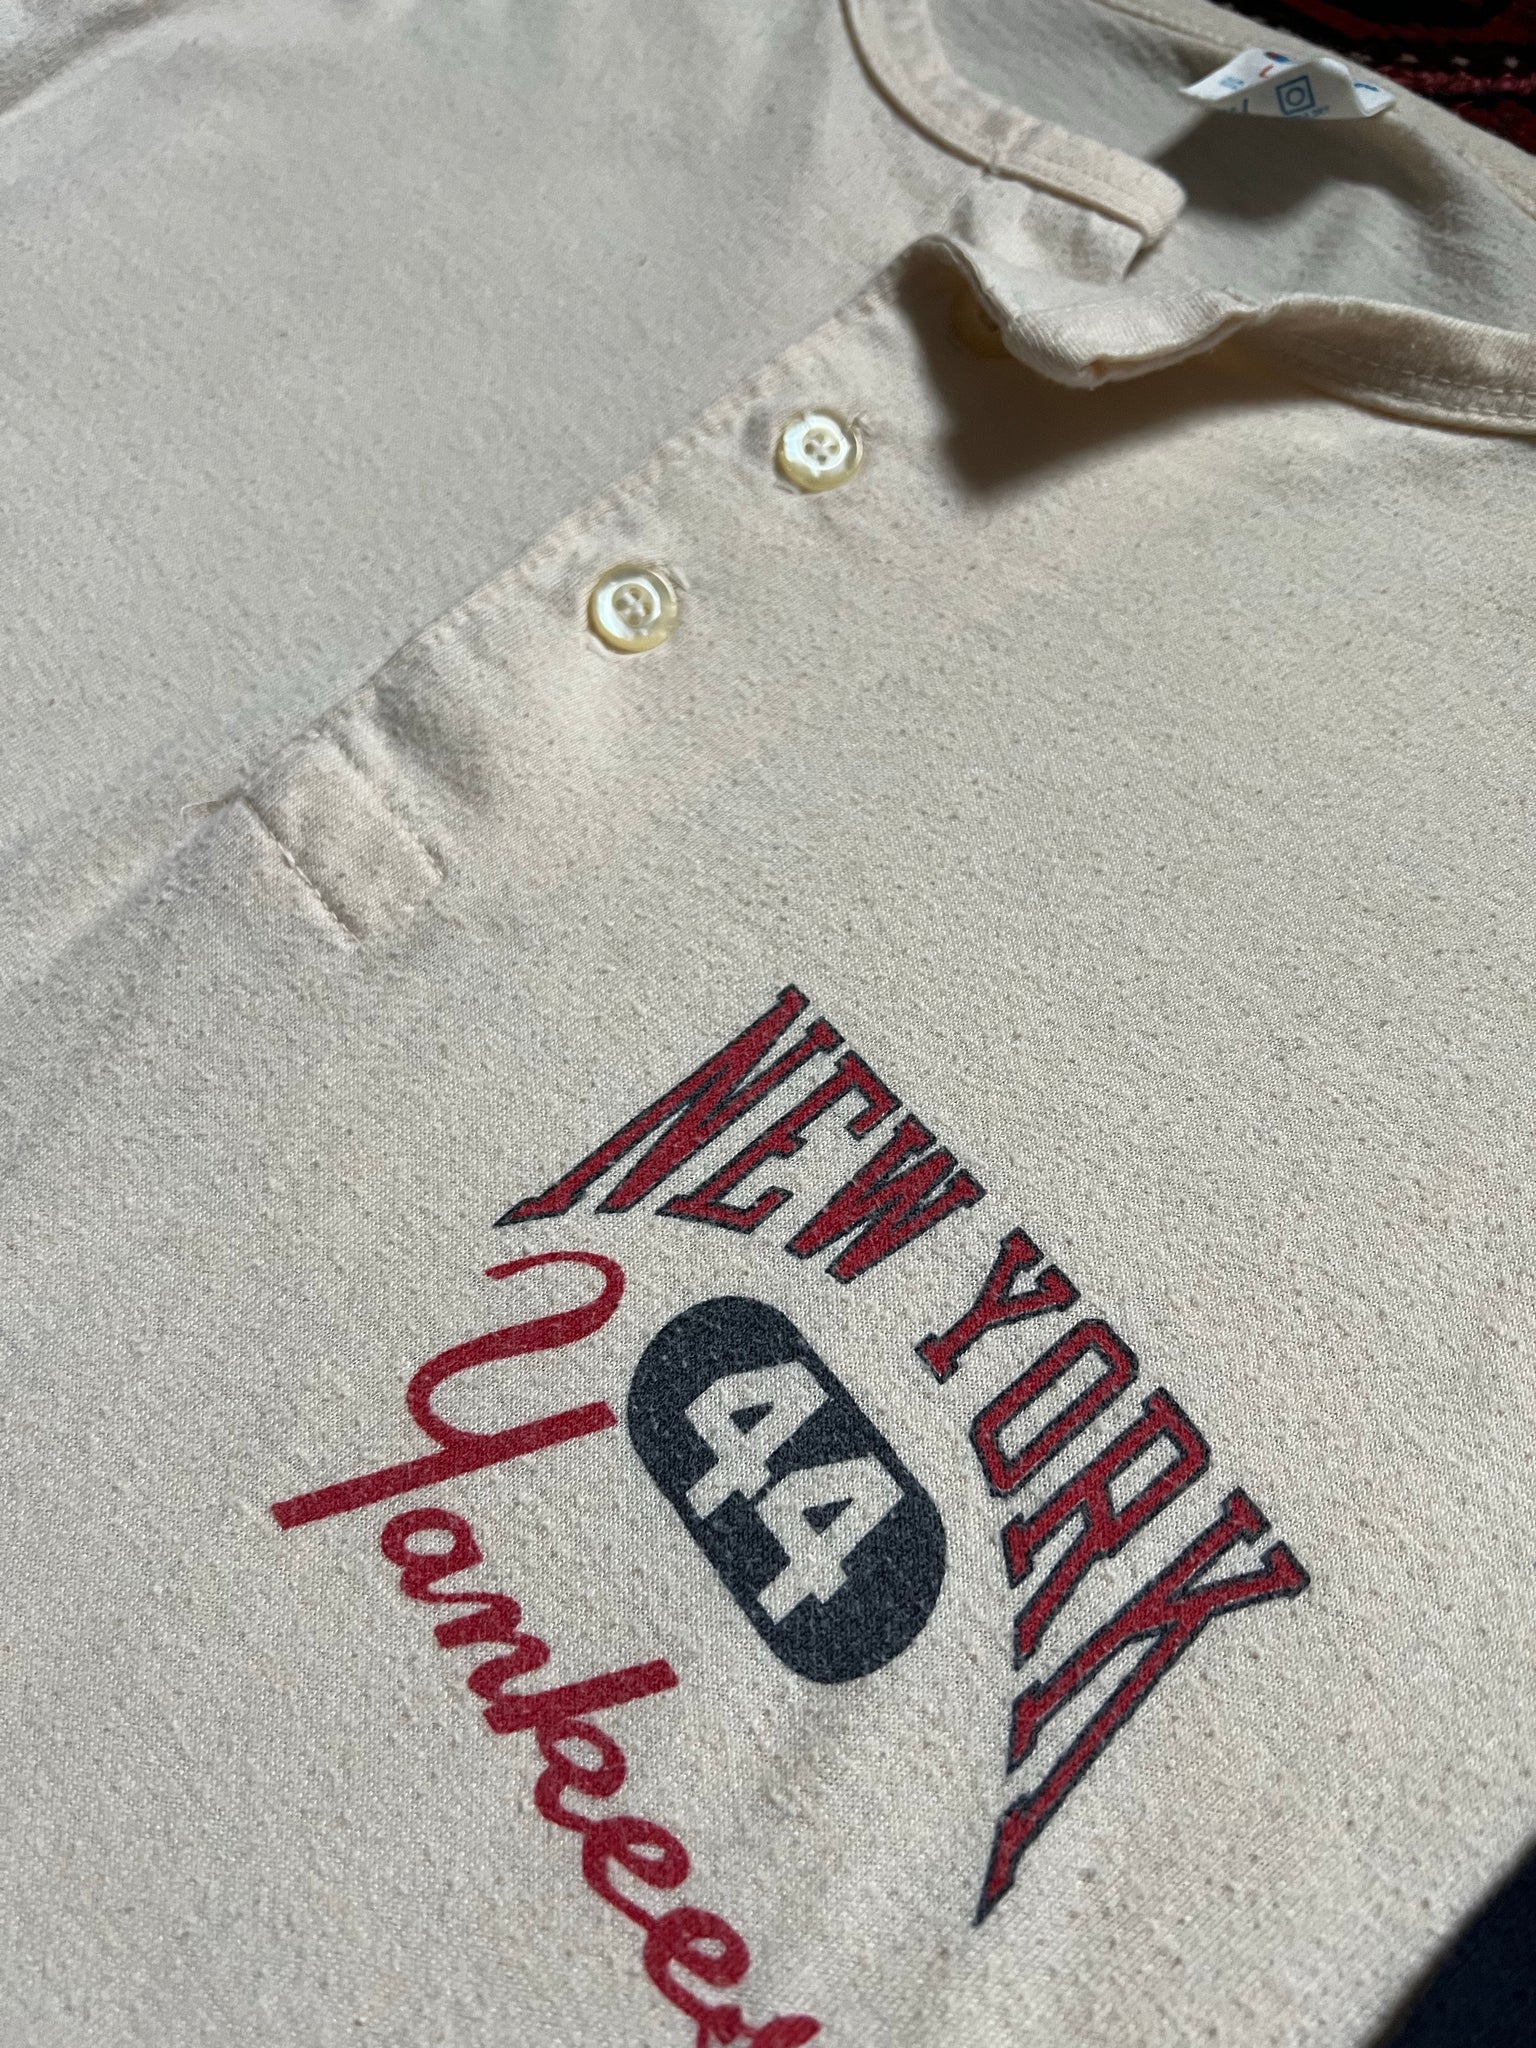 new york yankees henley shirt